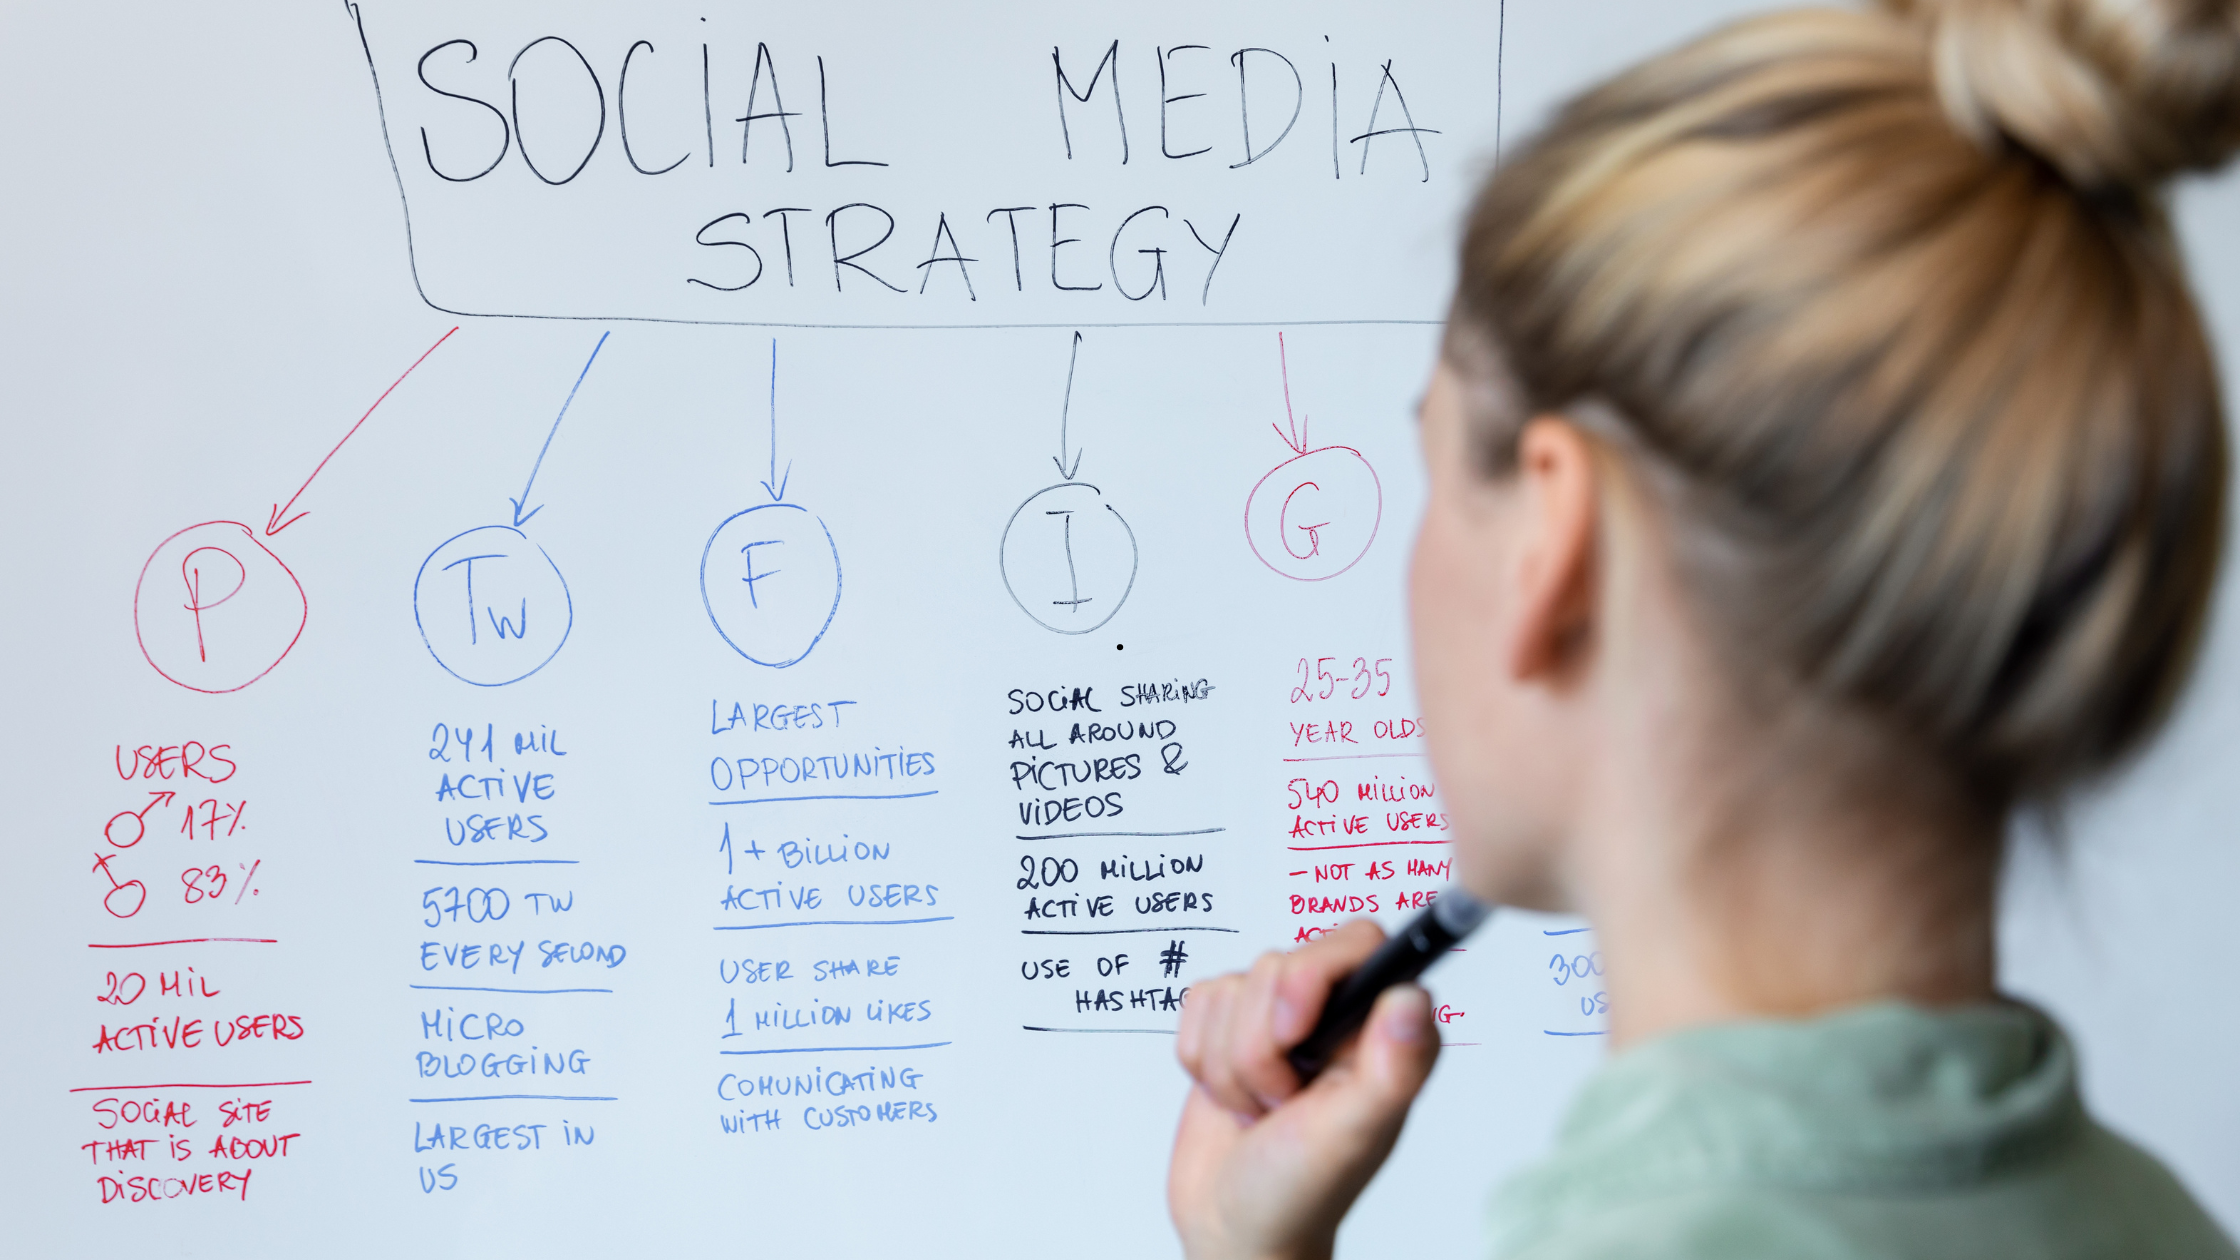 Social Media Marketing: What Platforms to Target for Drop Servicing?